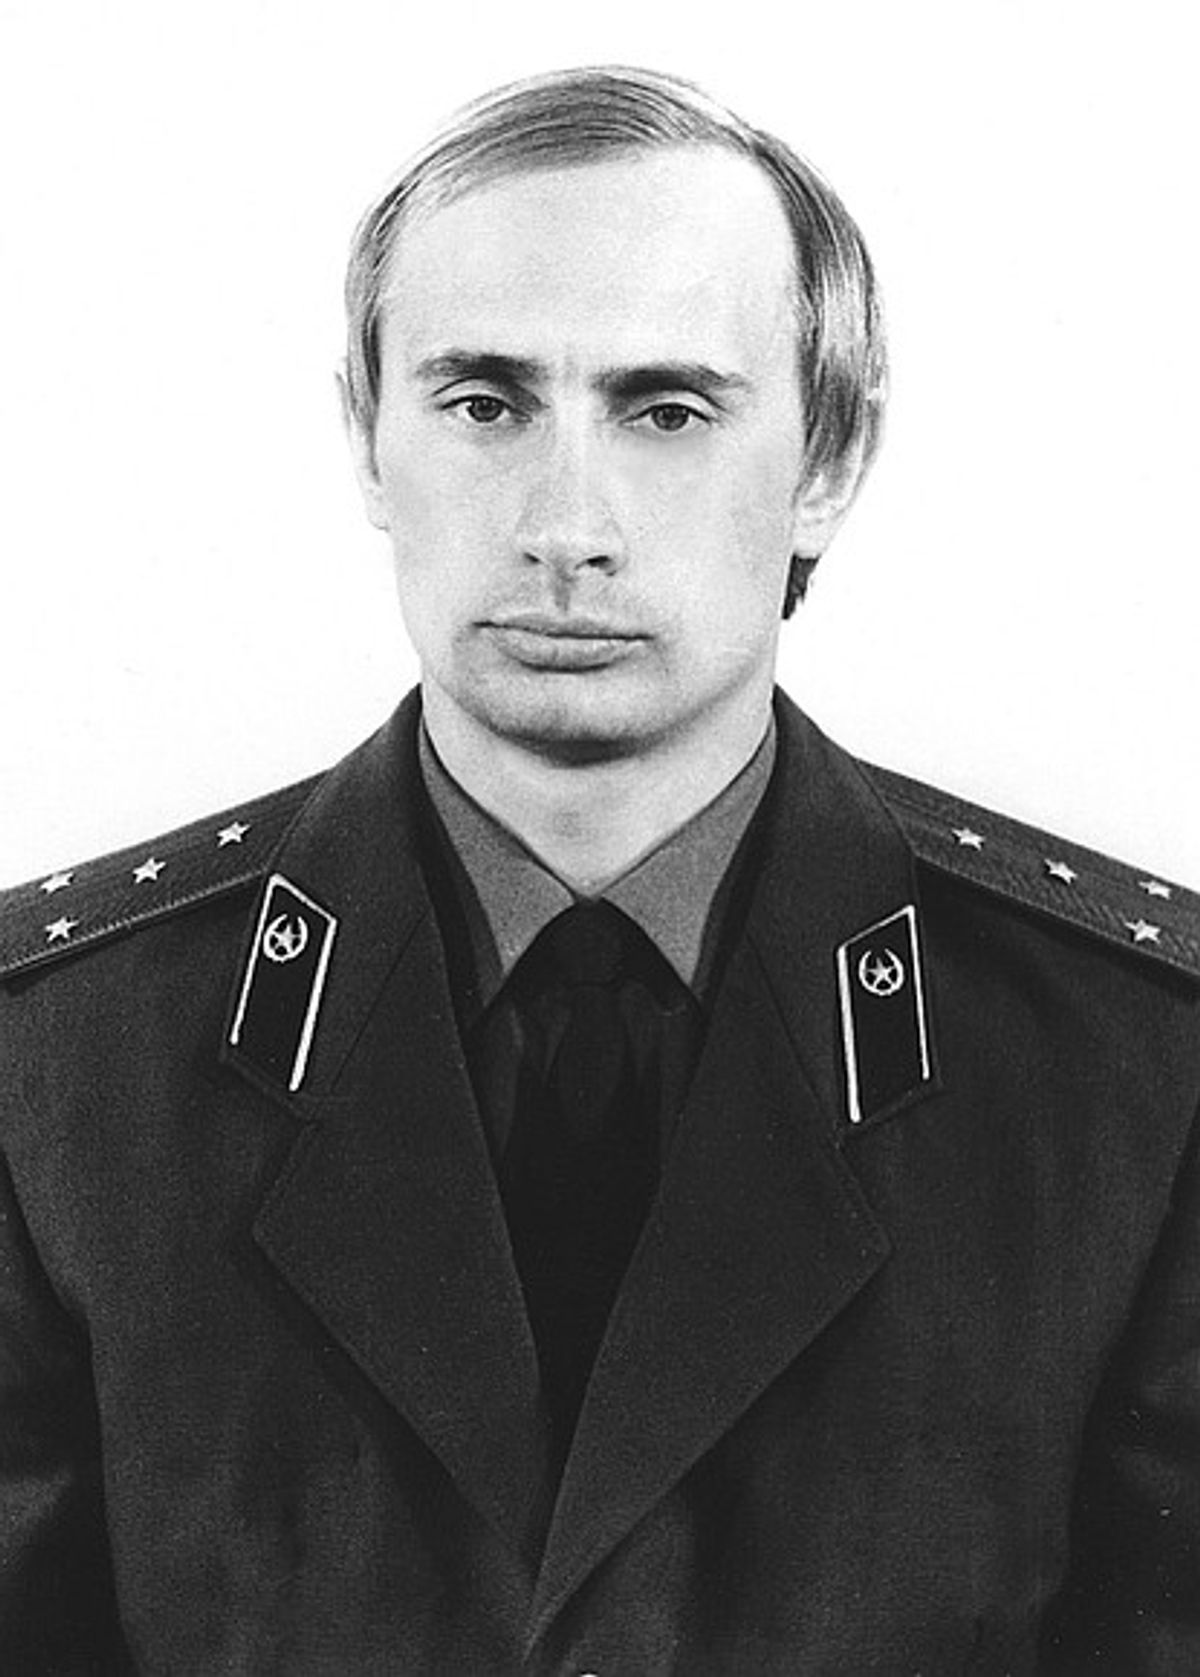 Image for article: Pretending Putin Is Hitler Endangers Us All